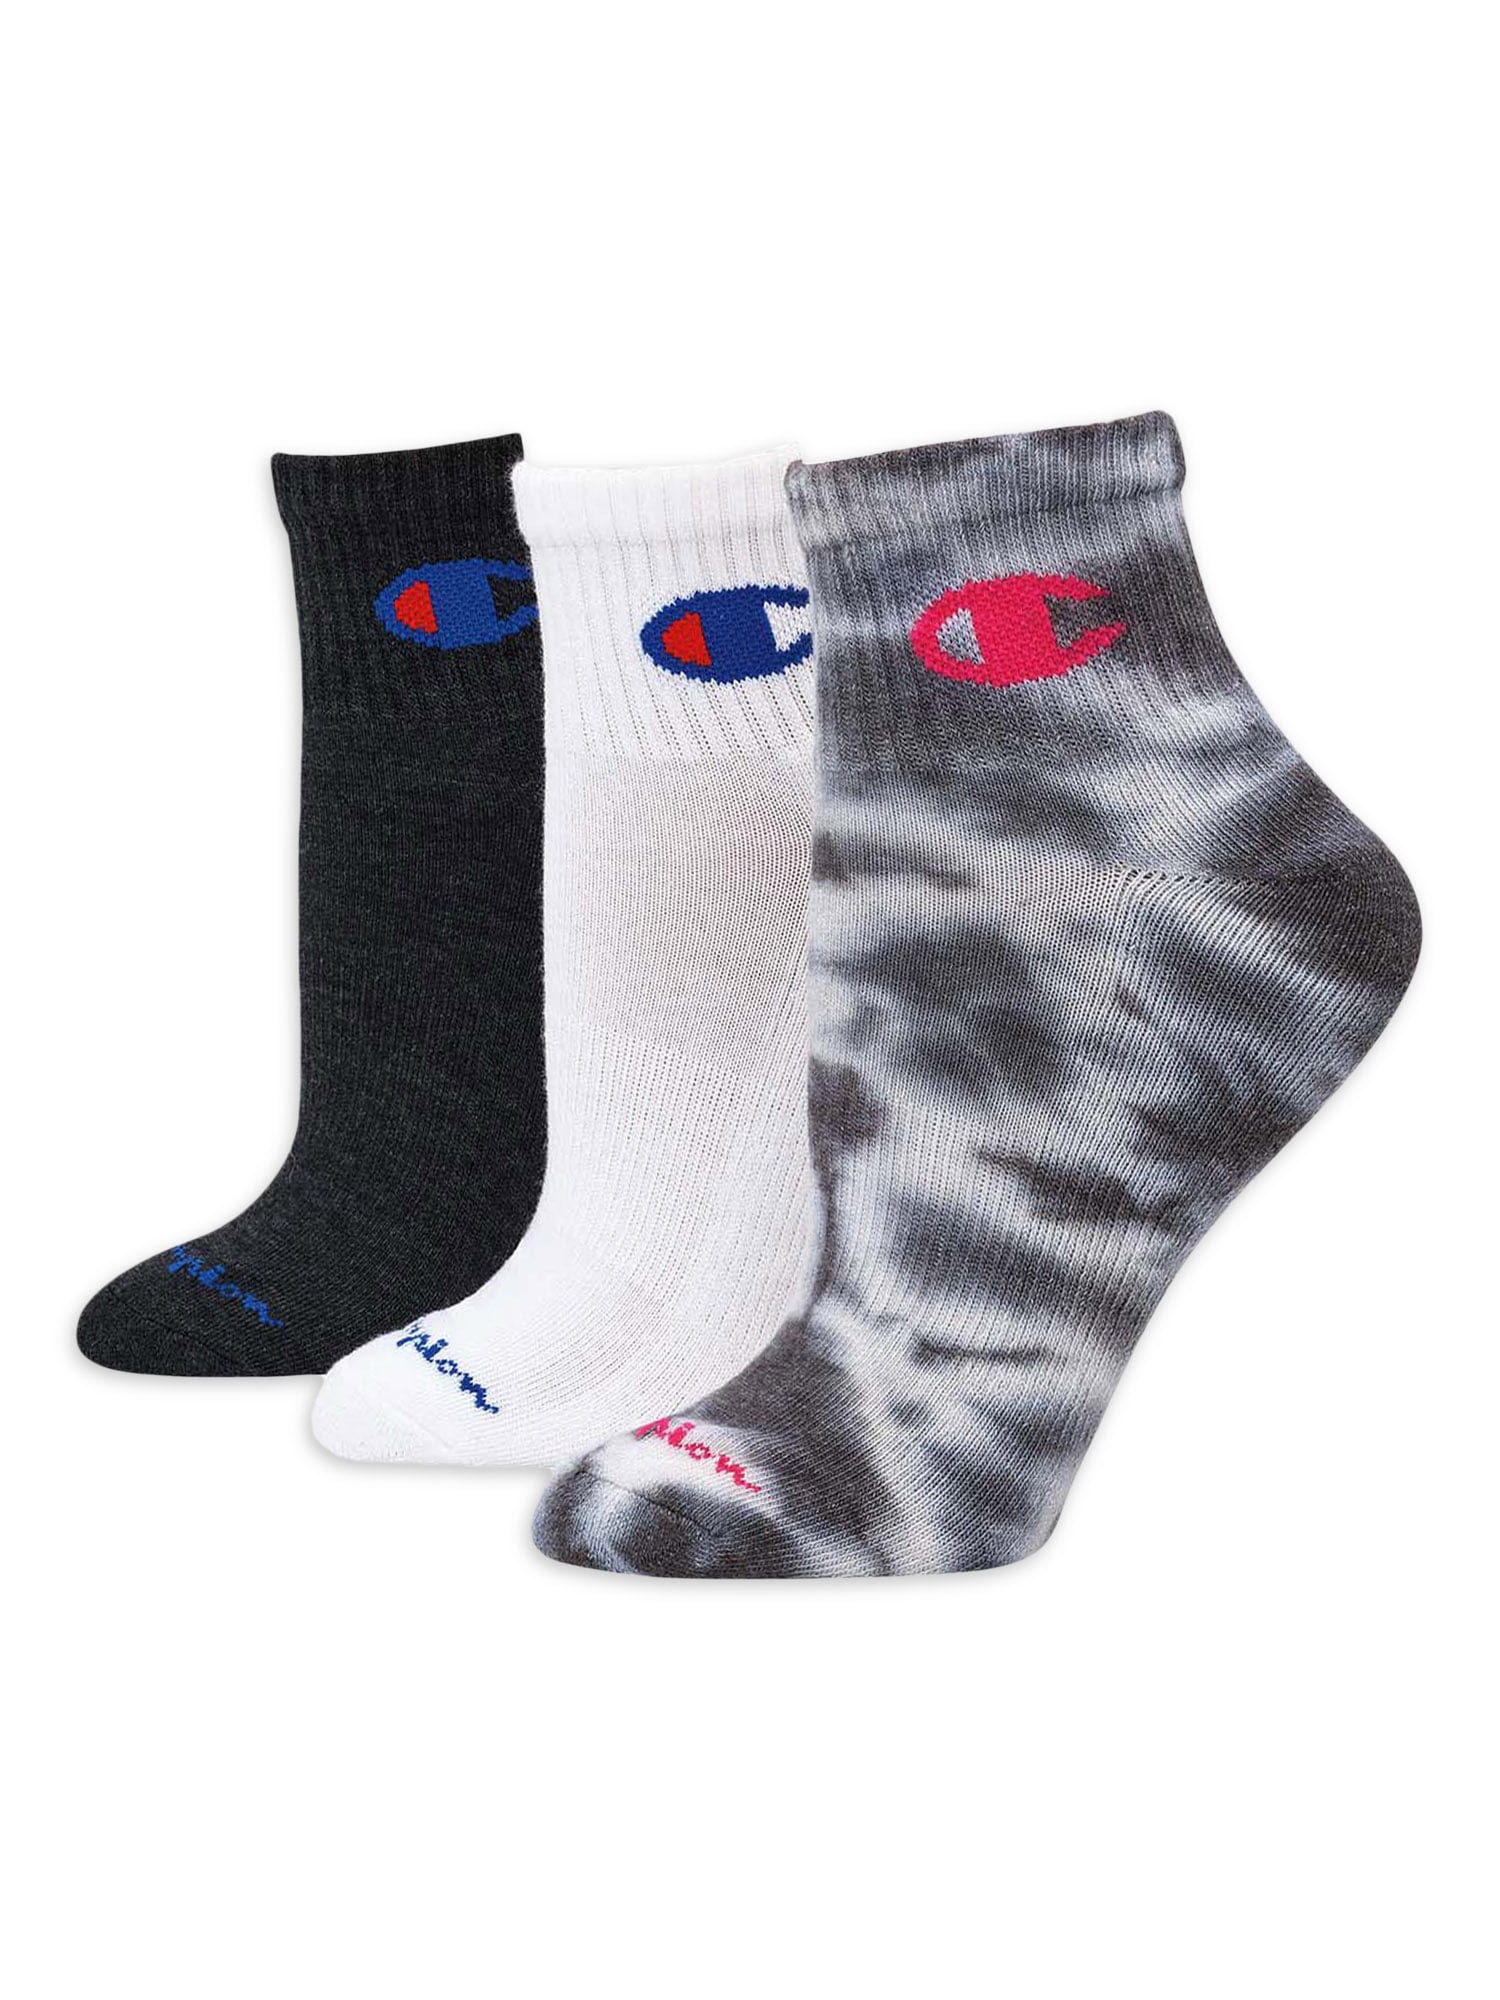 Champion Women's Ankle Socks, 3 Pack - Walmart.com